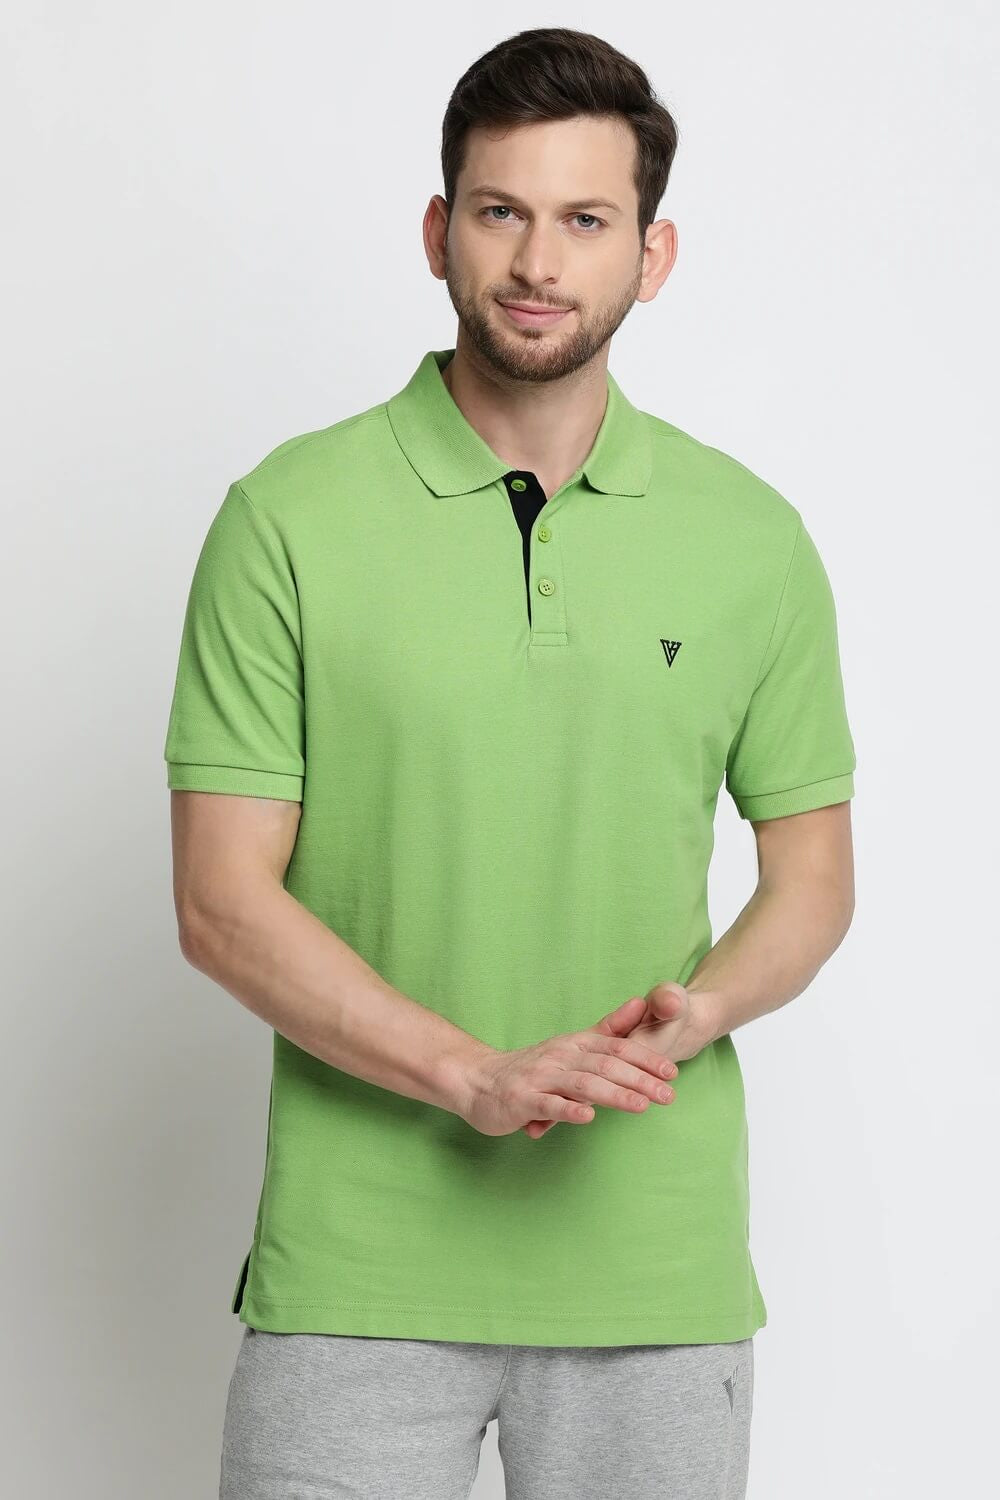 Van Heusen Green Polo Tshirt for Men #60032